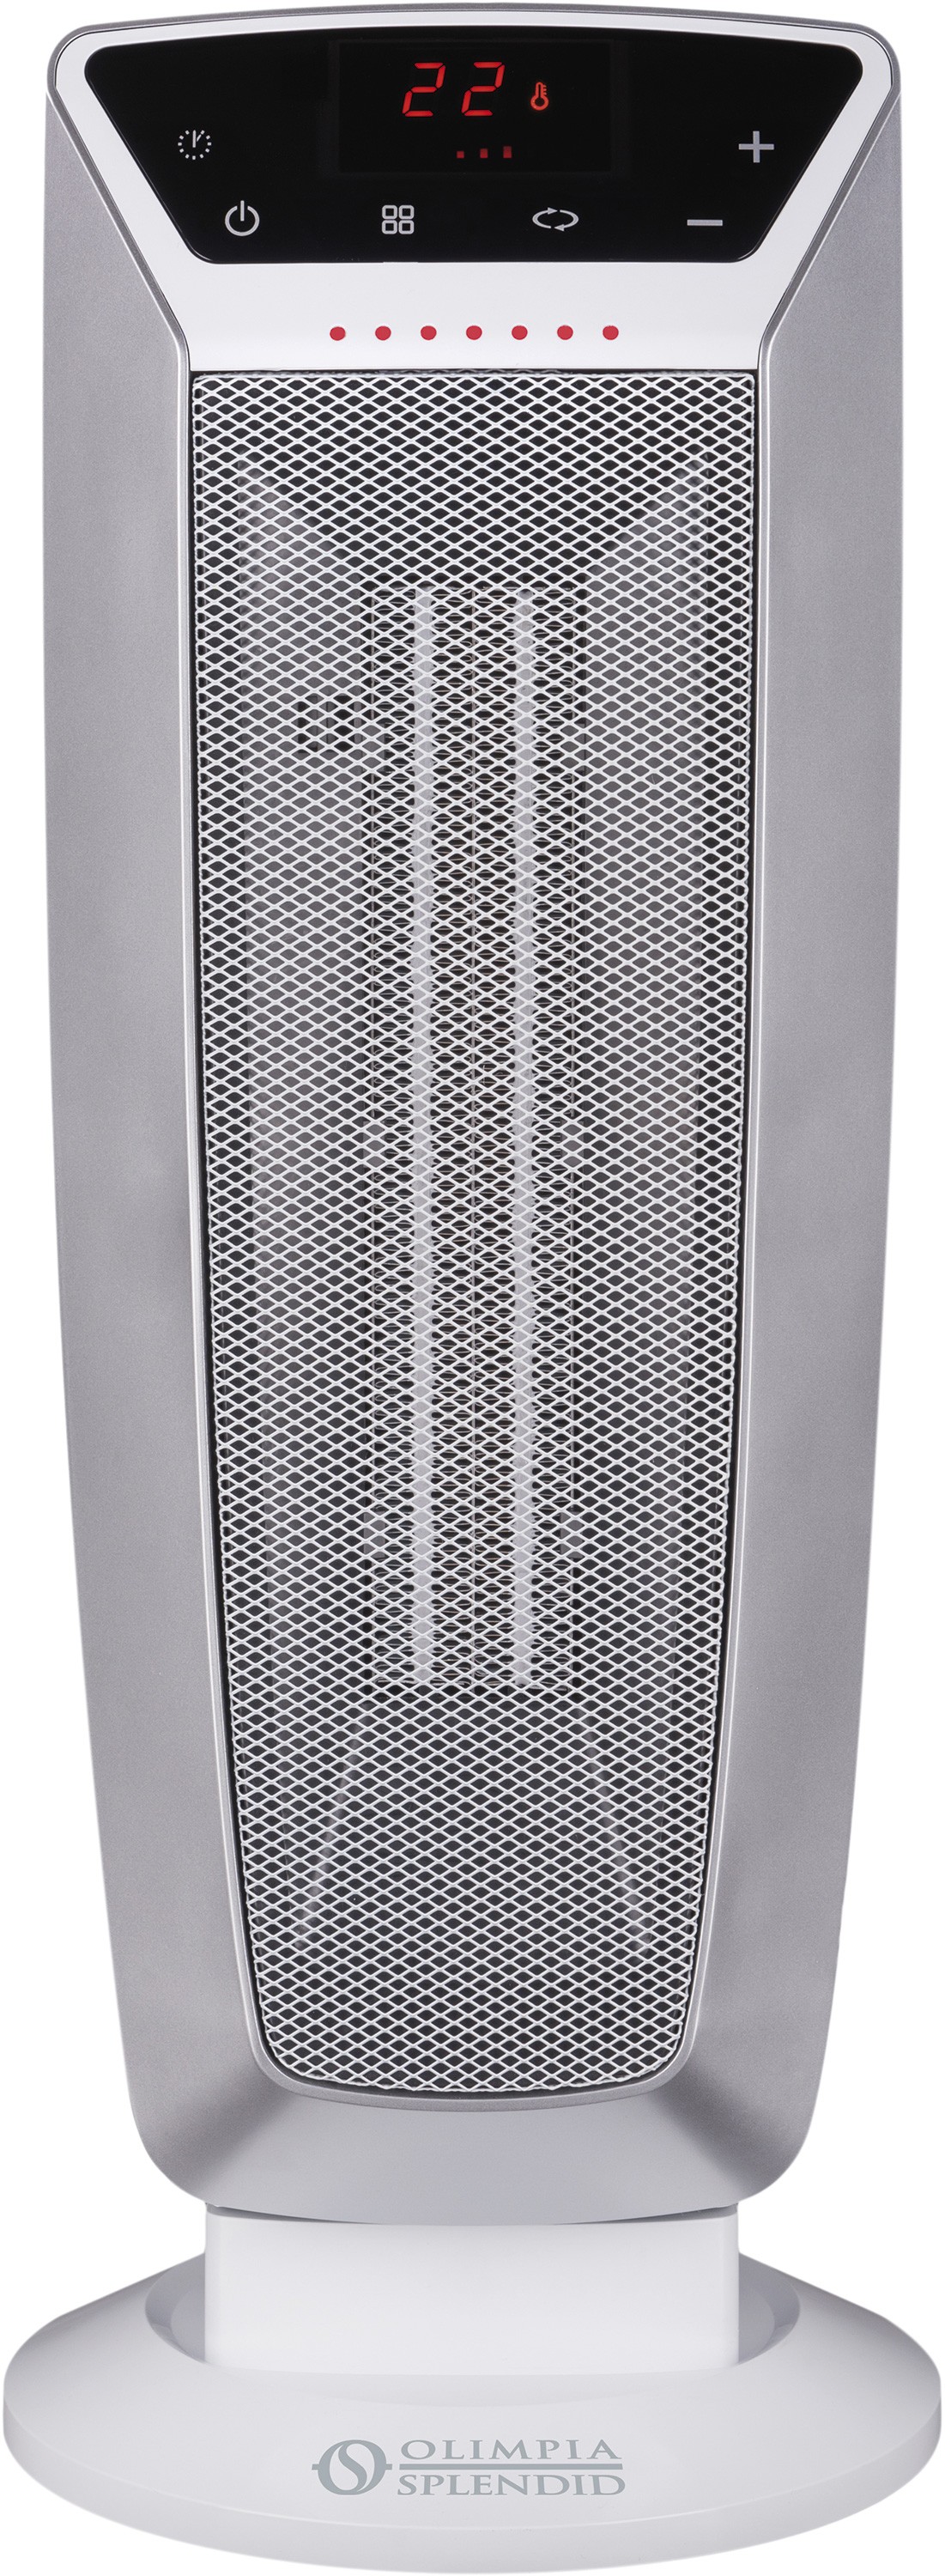 Тепловентилятор Olimpia Splendid CALDOSTILE DT (99450) в інтернет-магазині, головне фото